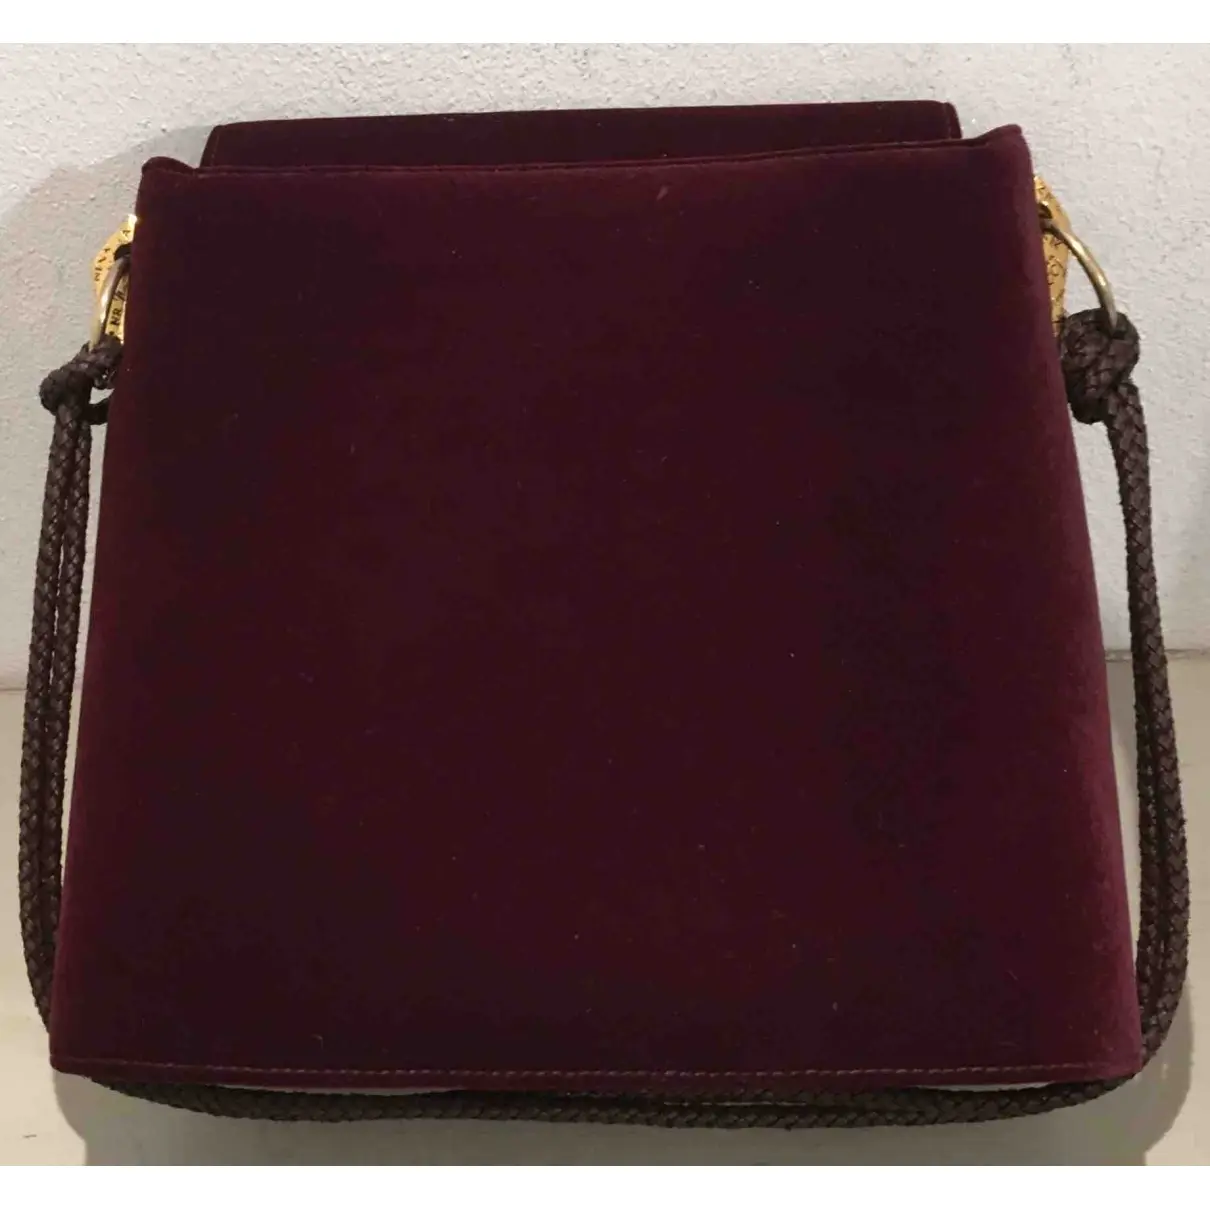 Buy Nina Ricci Velvet handbag online - Vintage